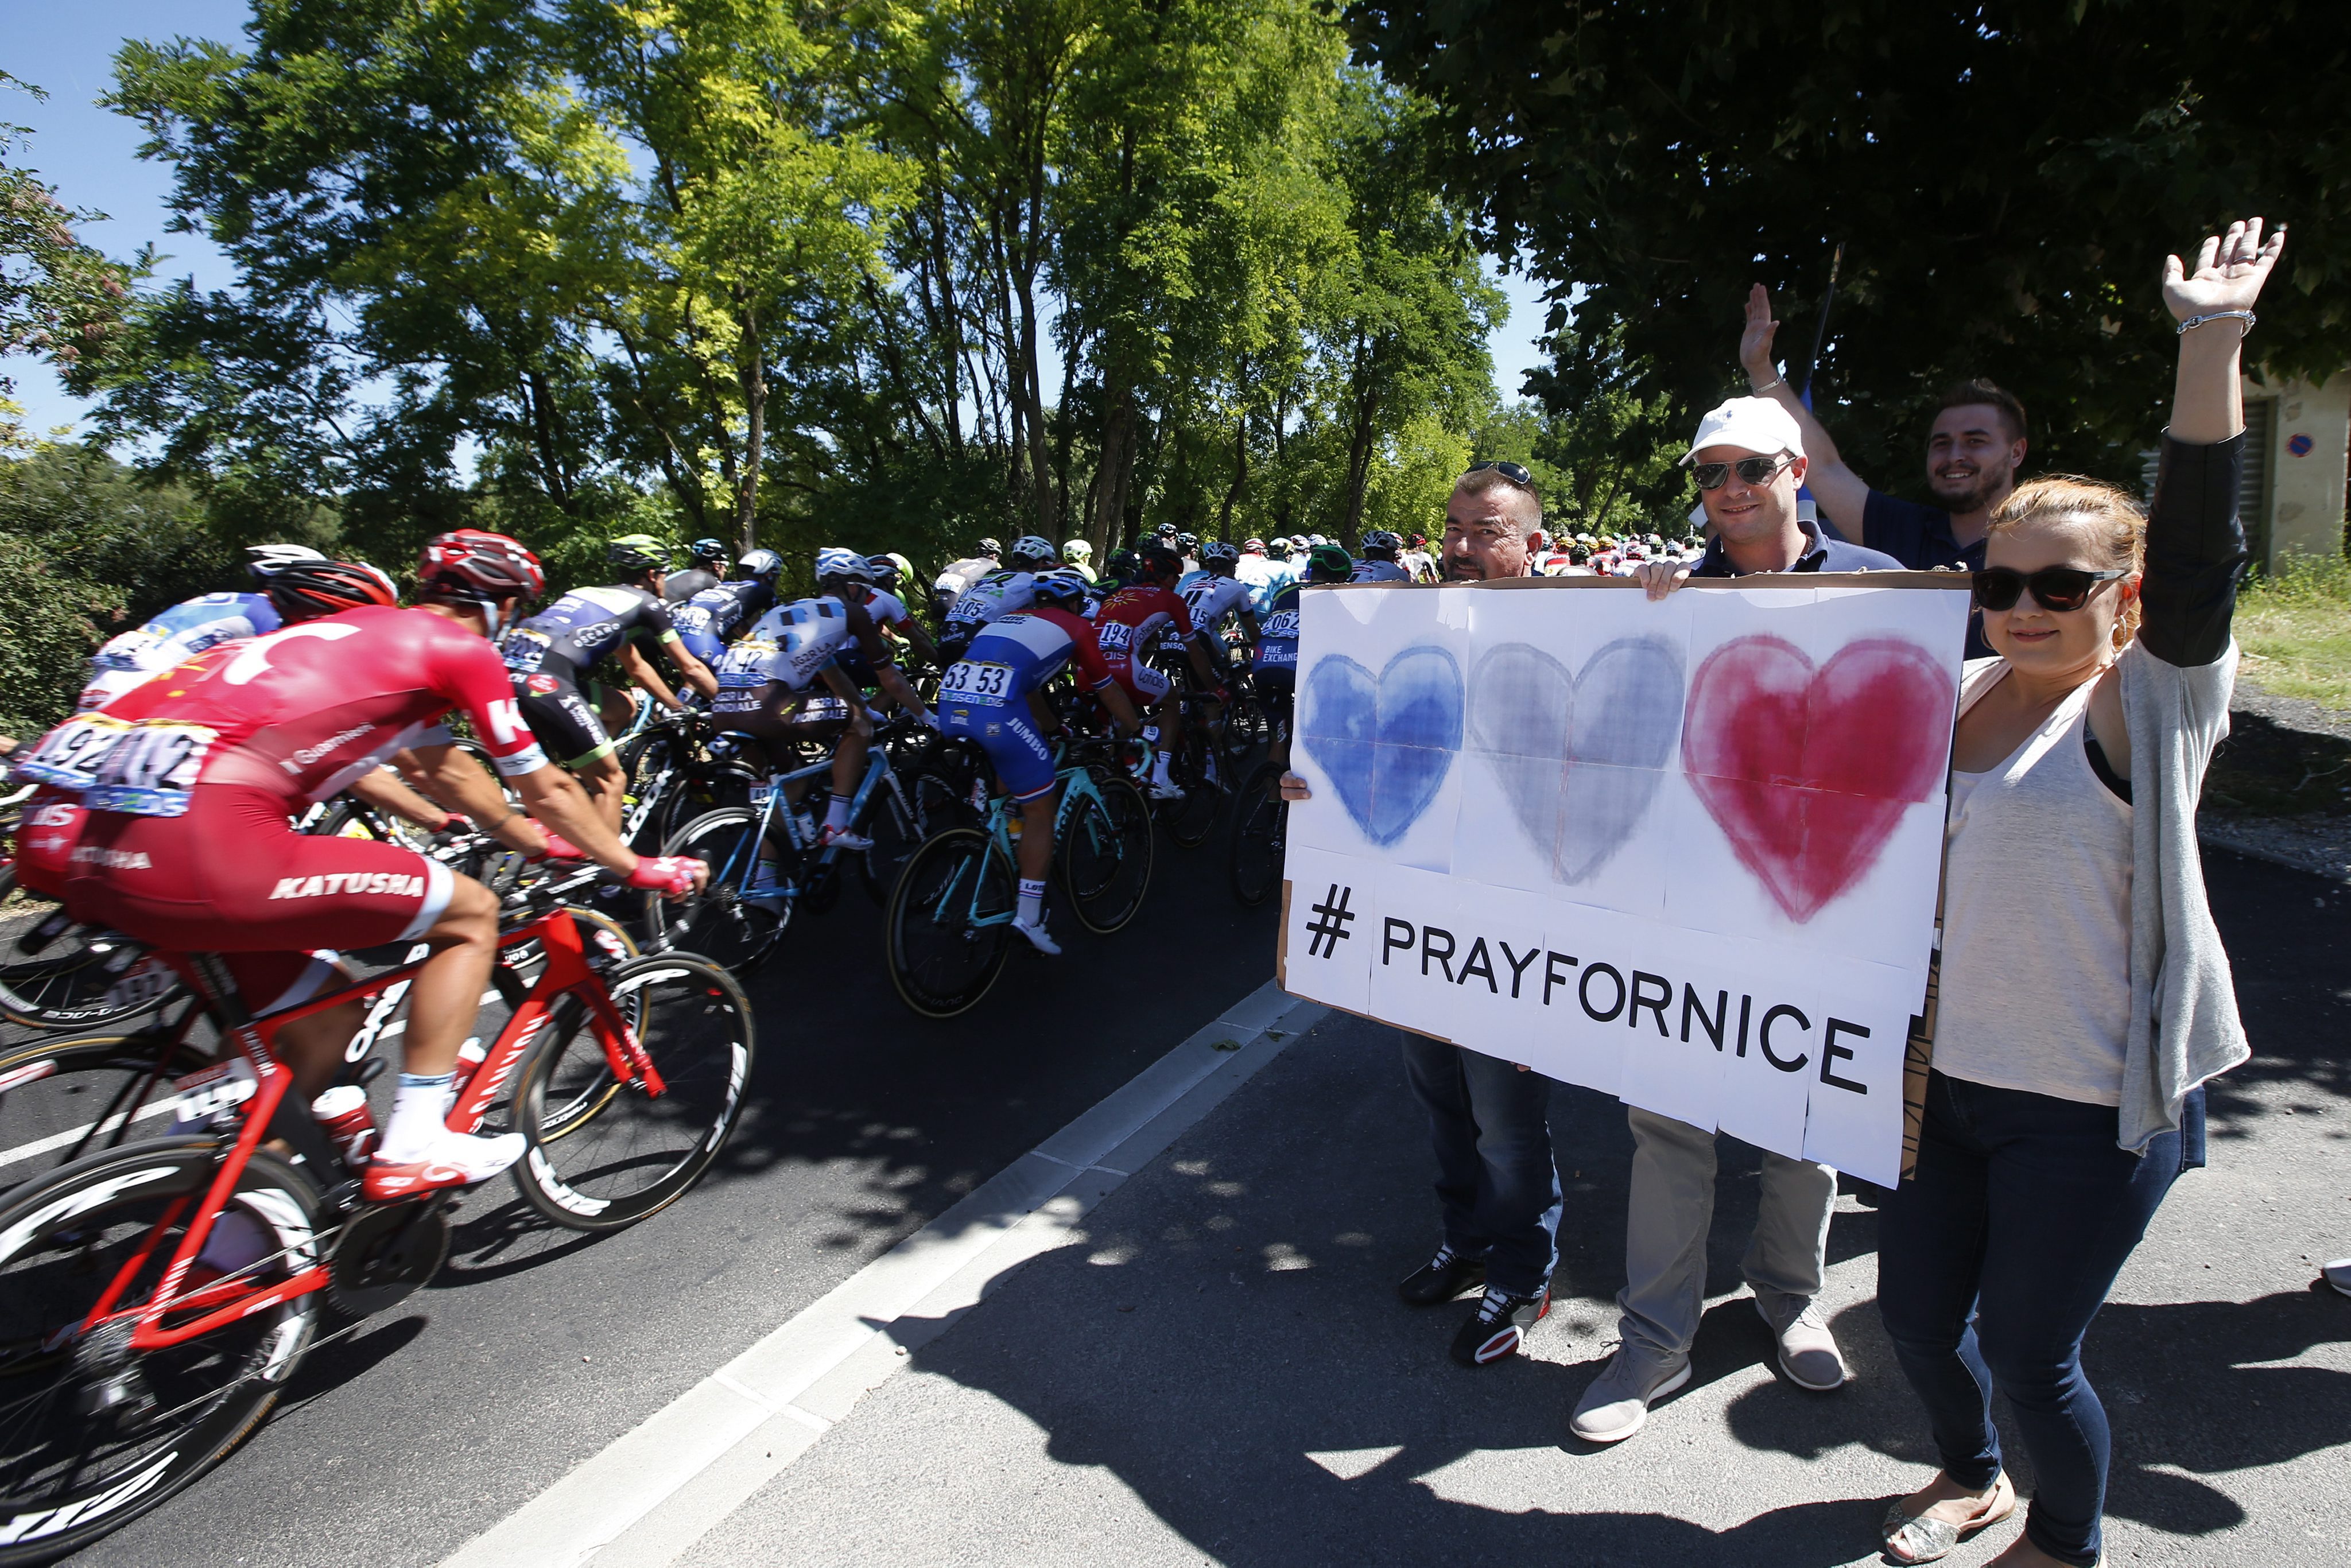 Tour de France start in Nice in 2020